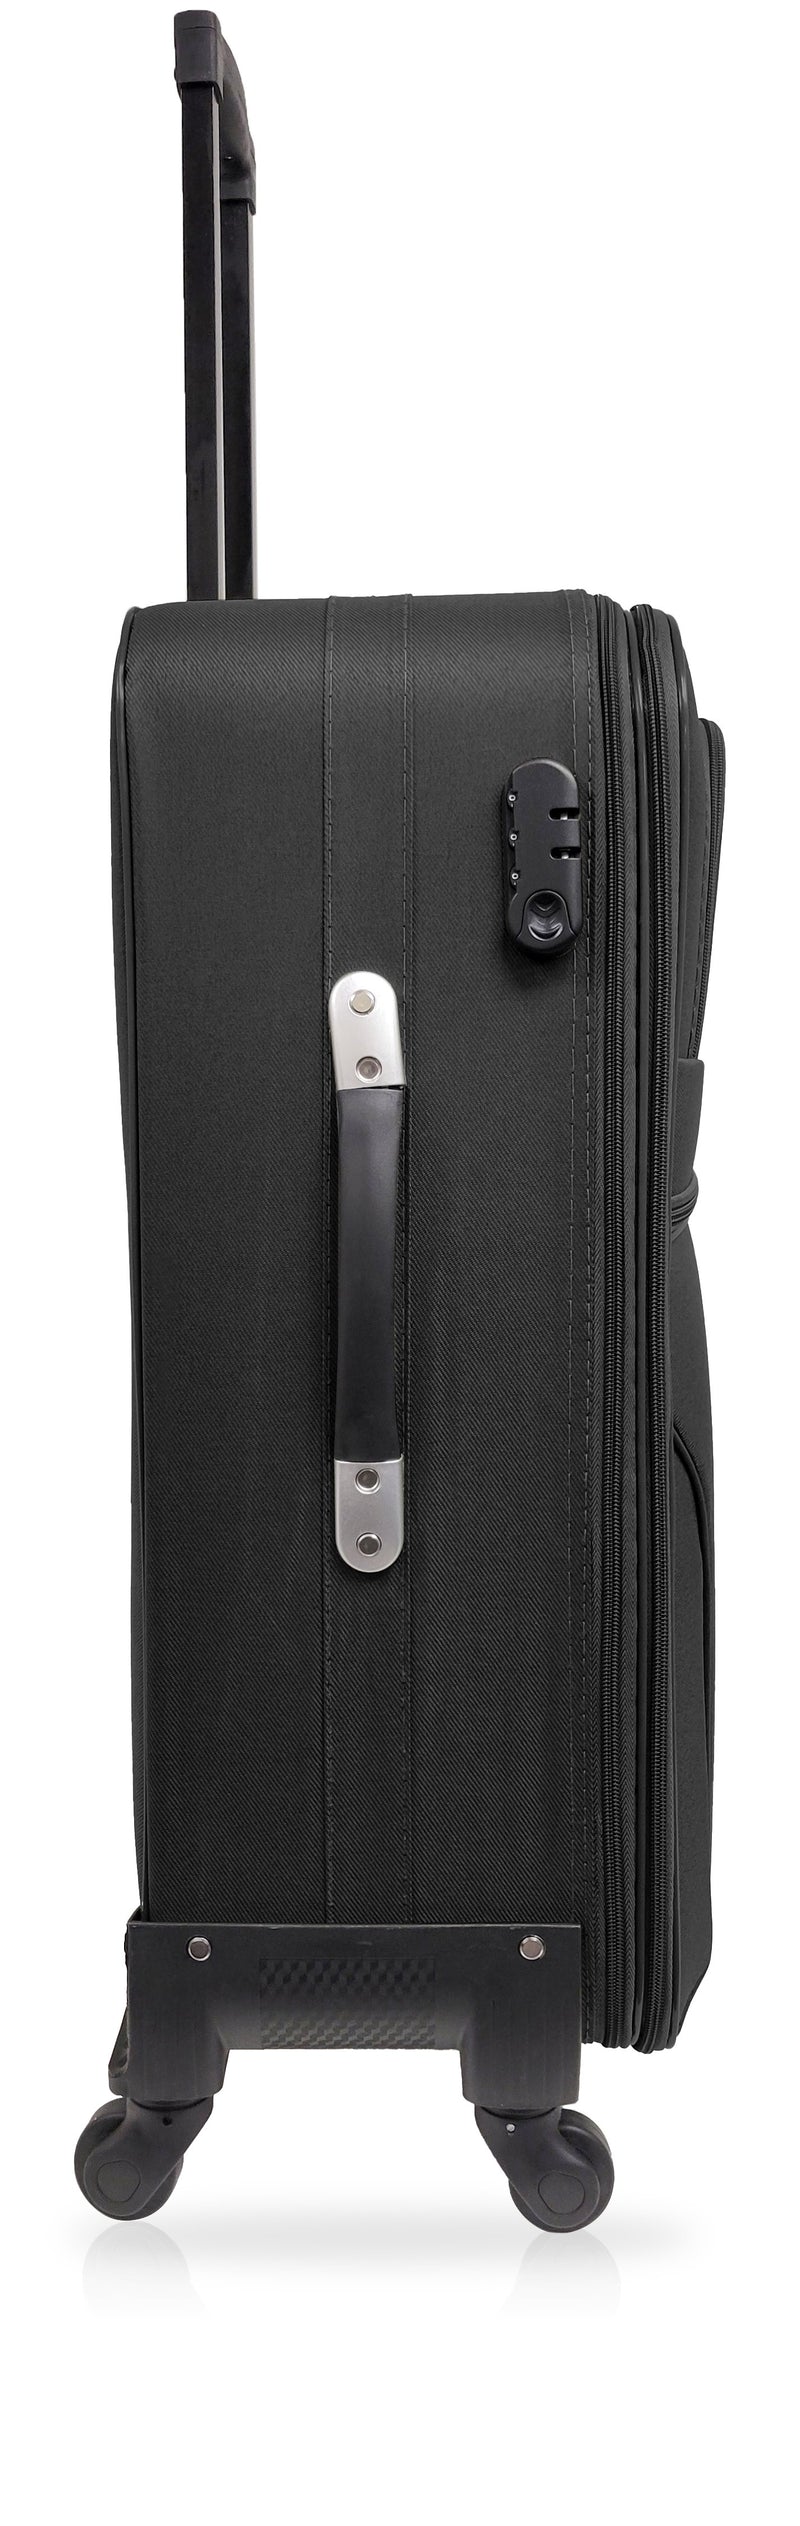 TOSCANO 32-inch Allacciare Lightweight Luggage Suitcase